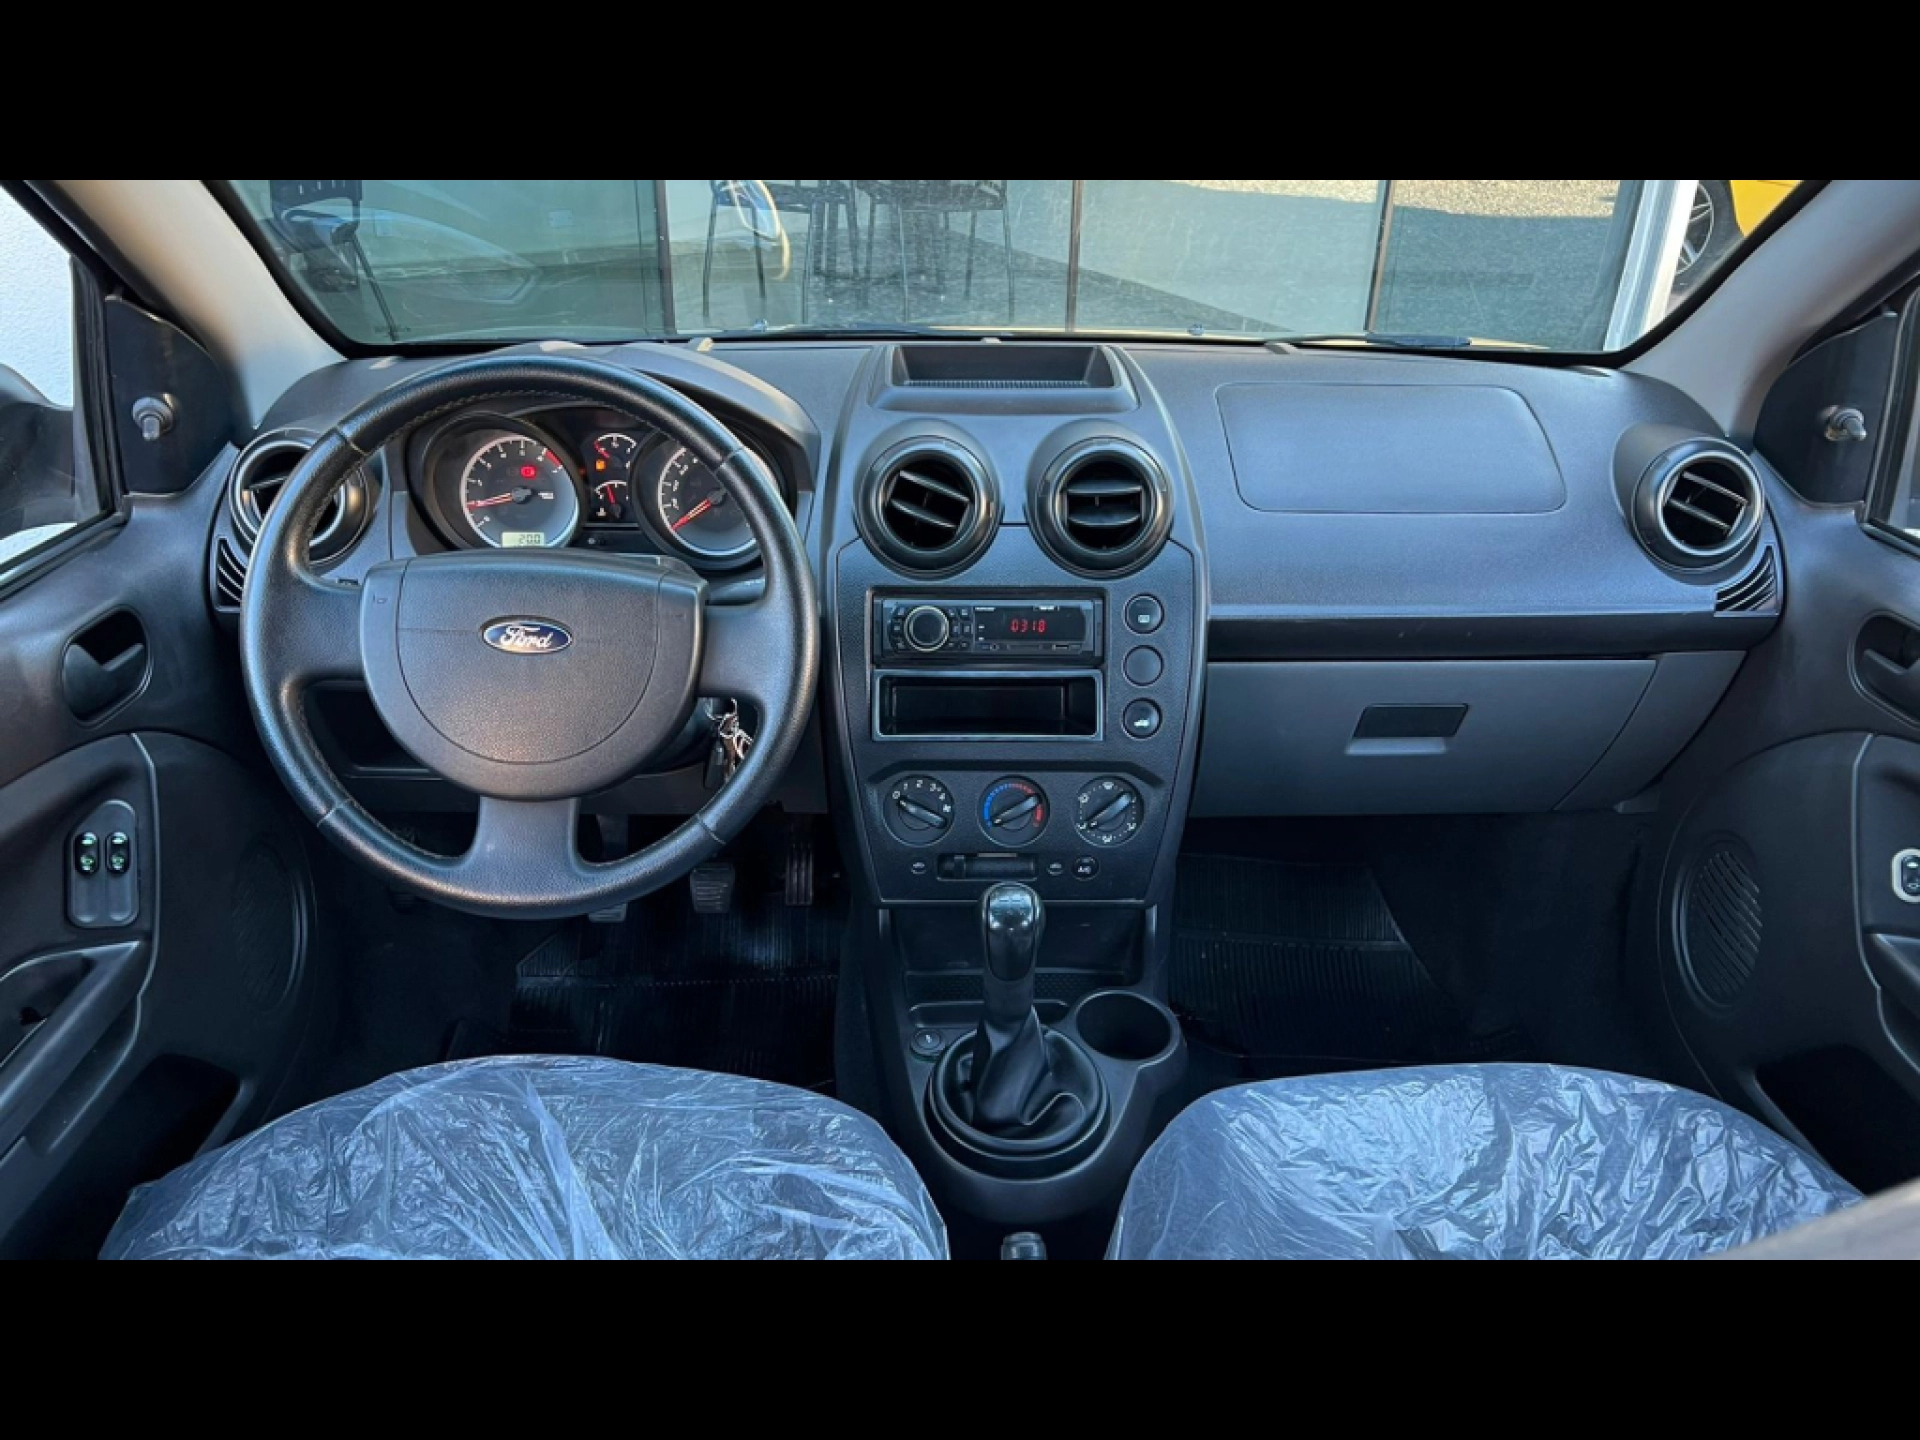 Ford Fiesta 1.0 2012